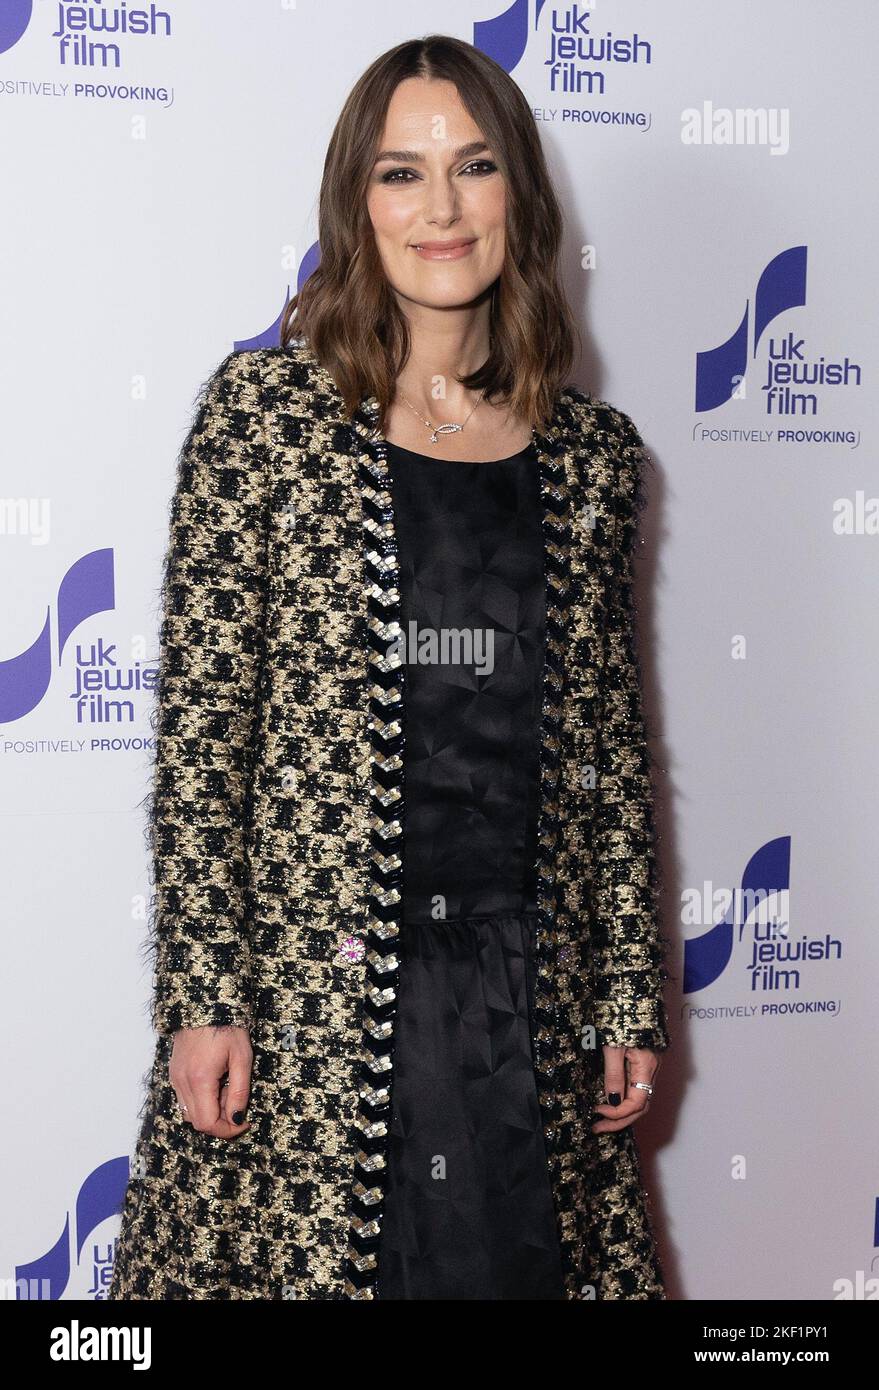 Keira Knightley attending the Jewish Film Festival UK premiere of ...